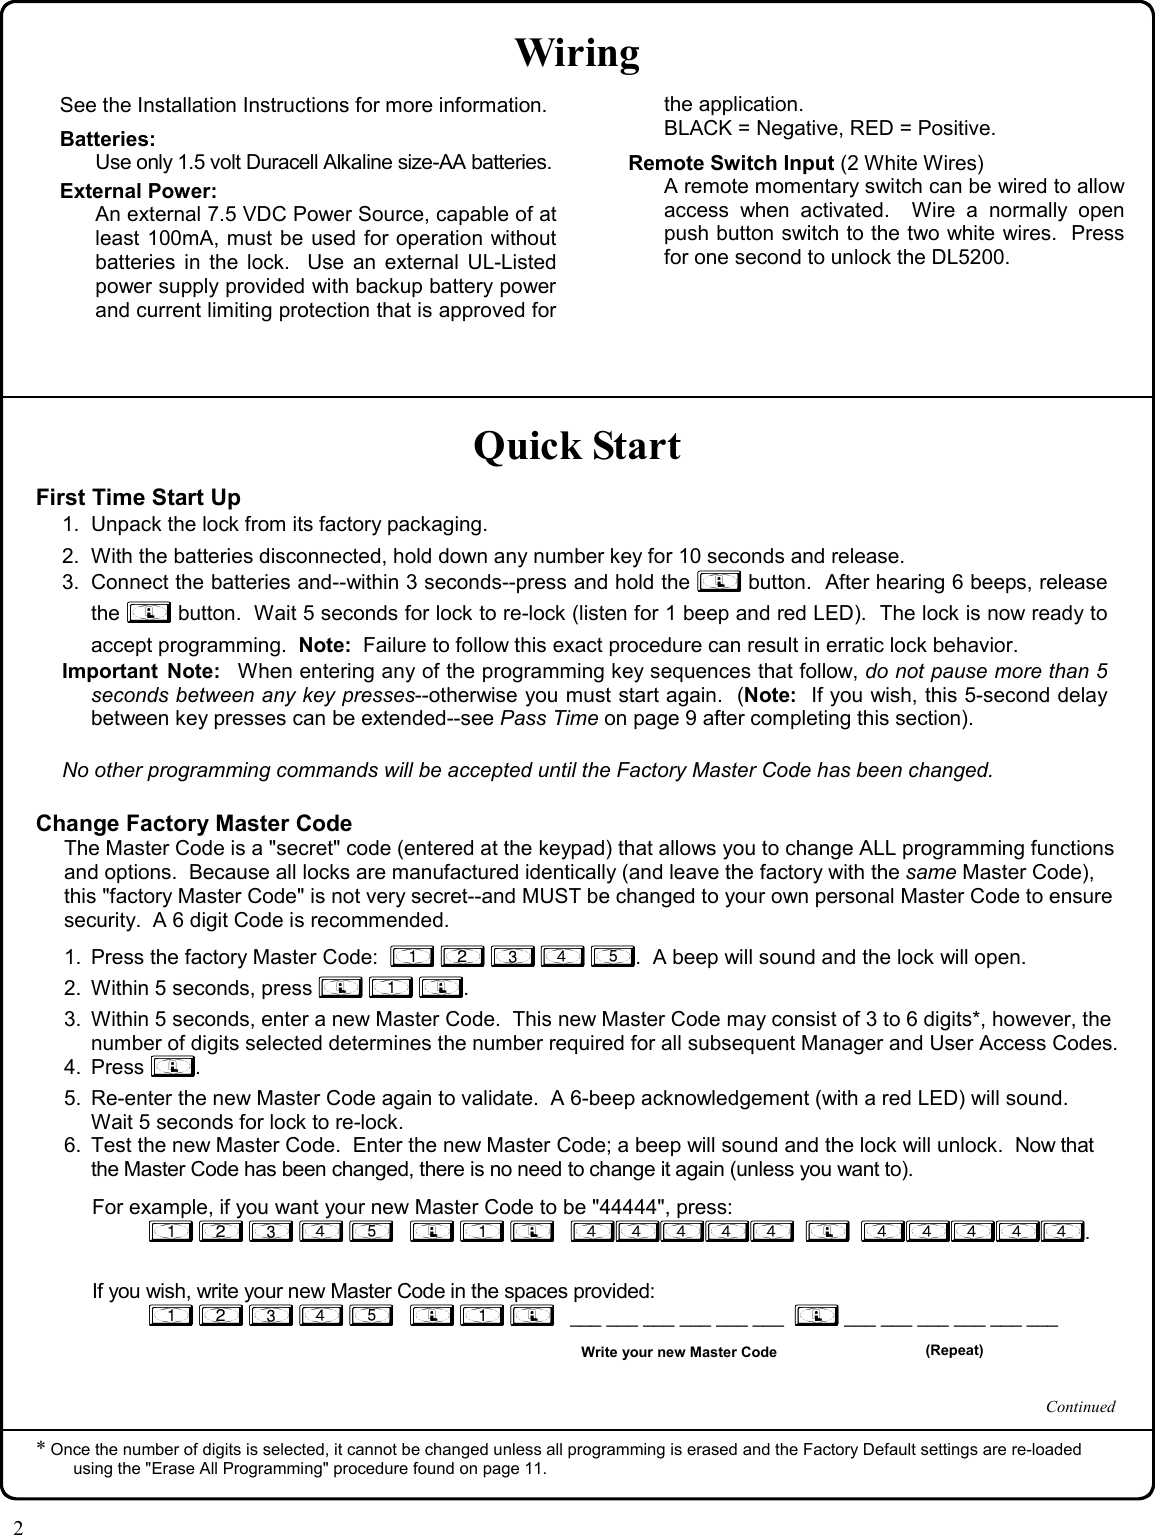 Page 2 of 12 - Alarm Lock DL5200_OI345.05_PROG DL5200 Programming Instructions OI345.05 PROG